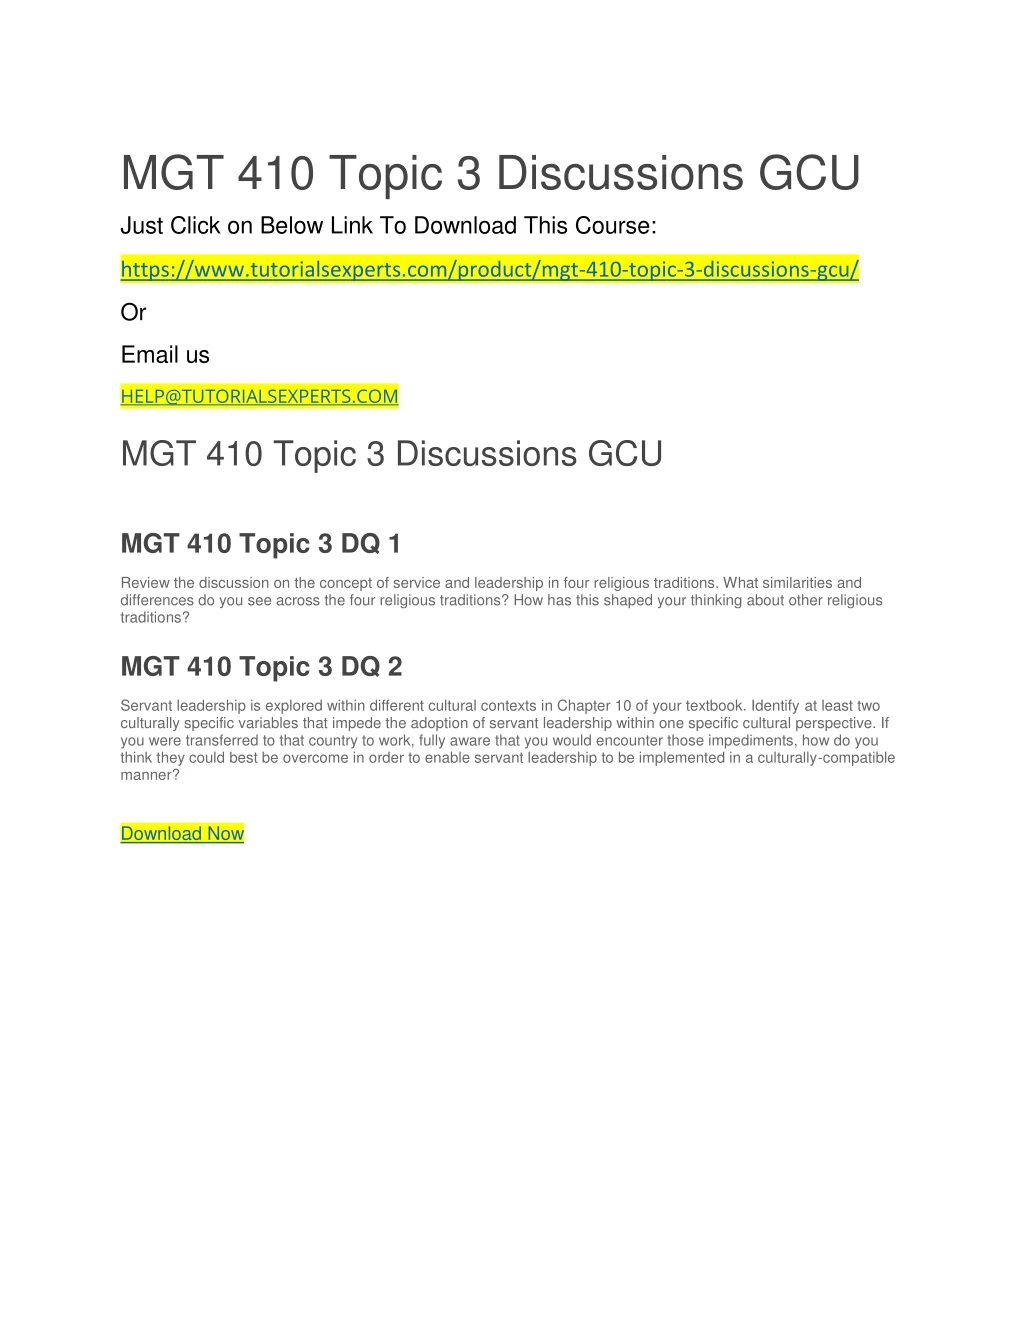 mgt 410 topic 3 discussions gcu just click